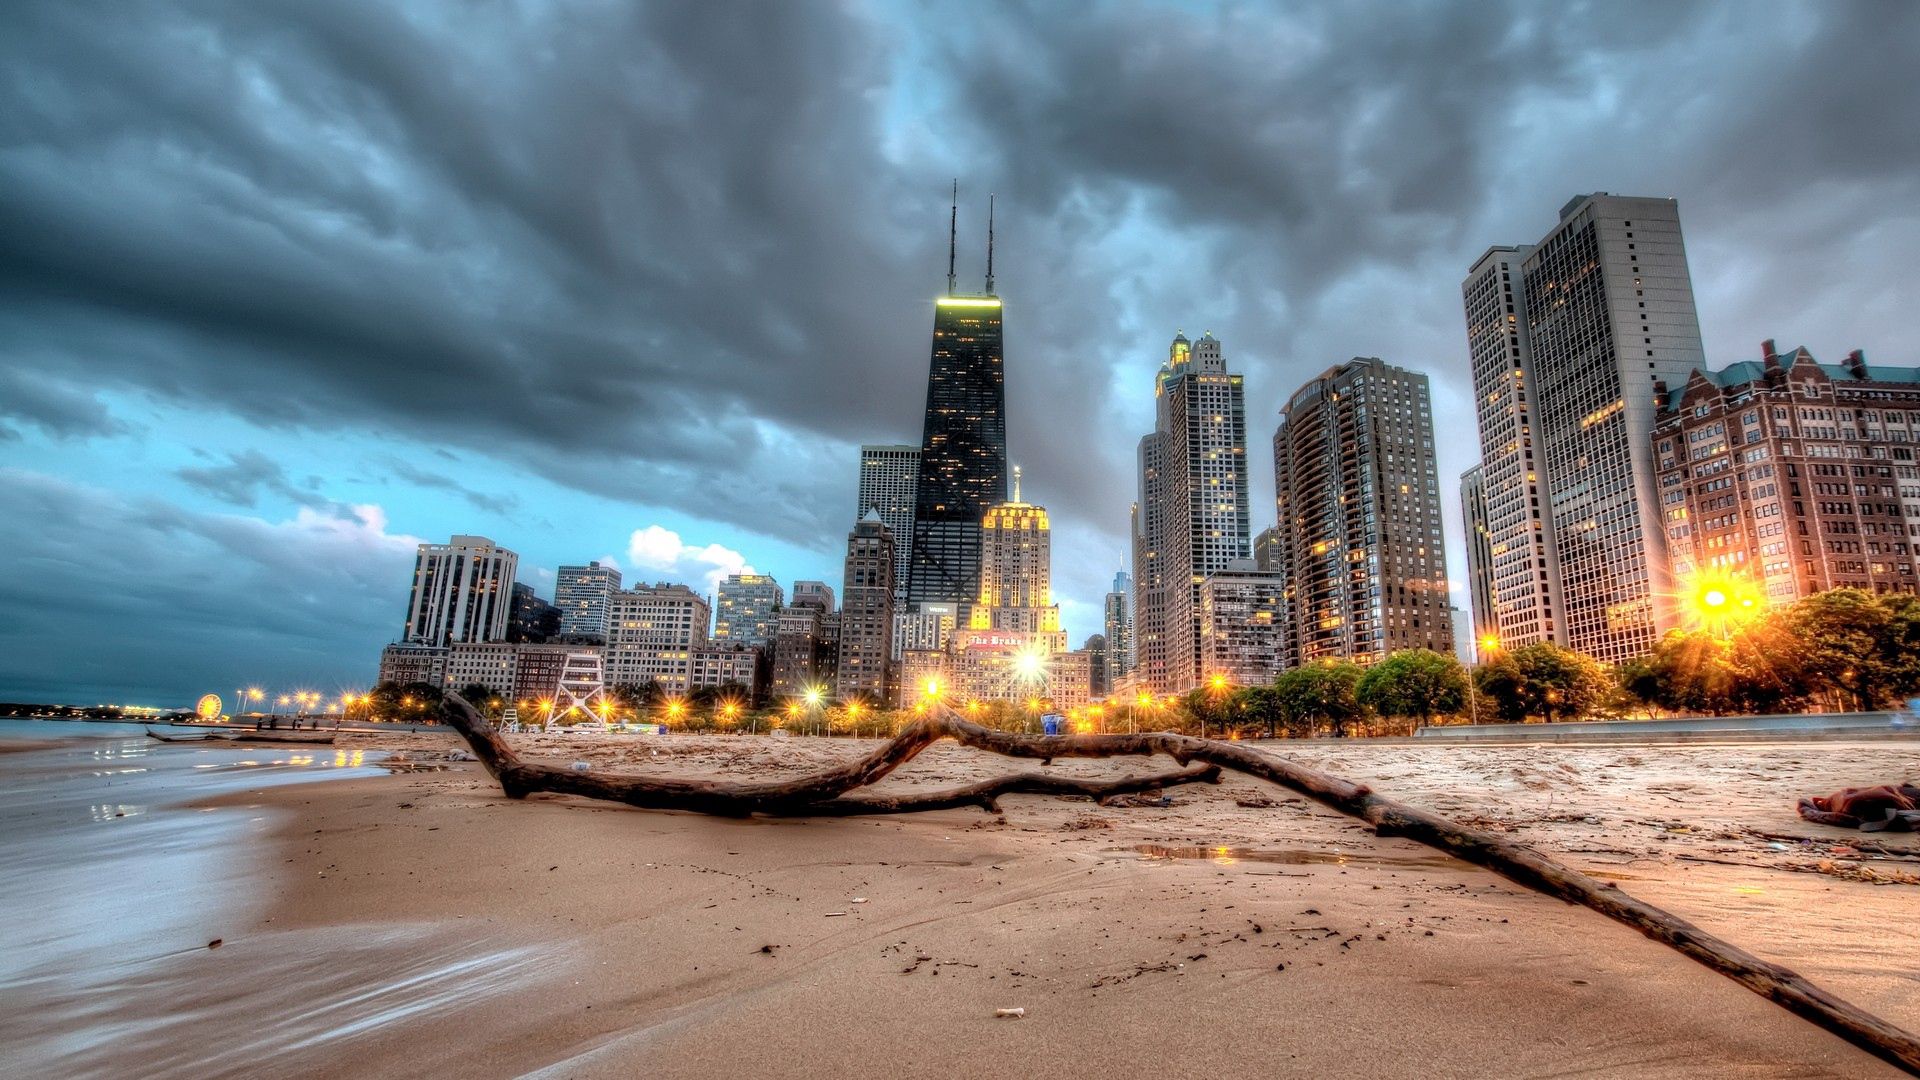 Desktop Backgrounds Chicago bank, cities, shore, sand